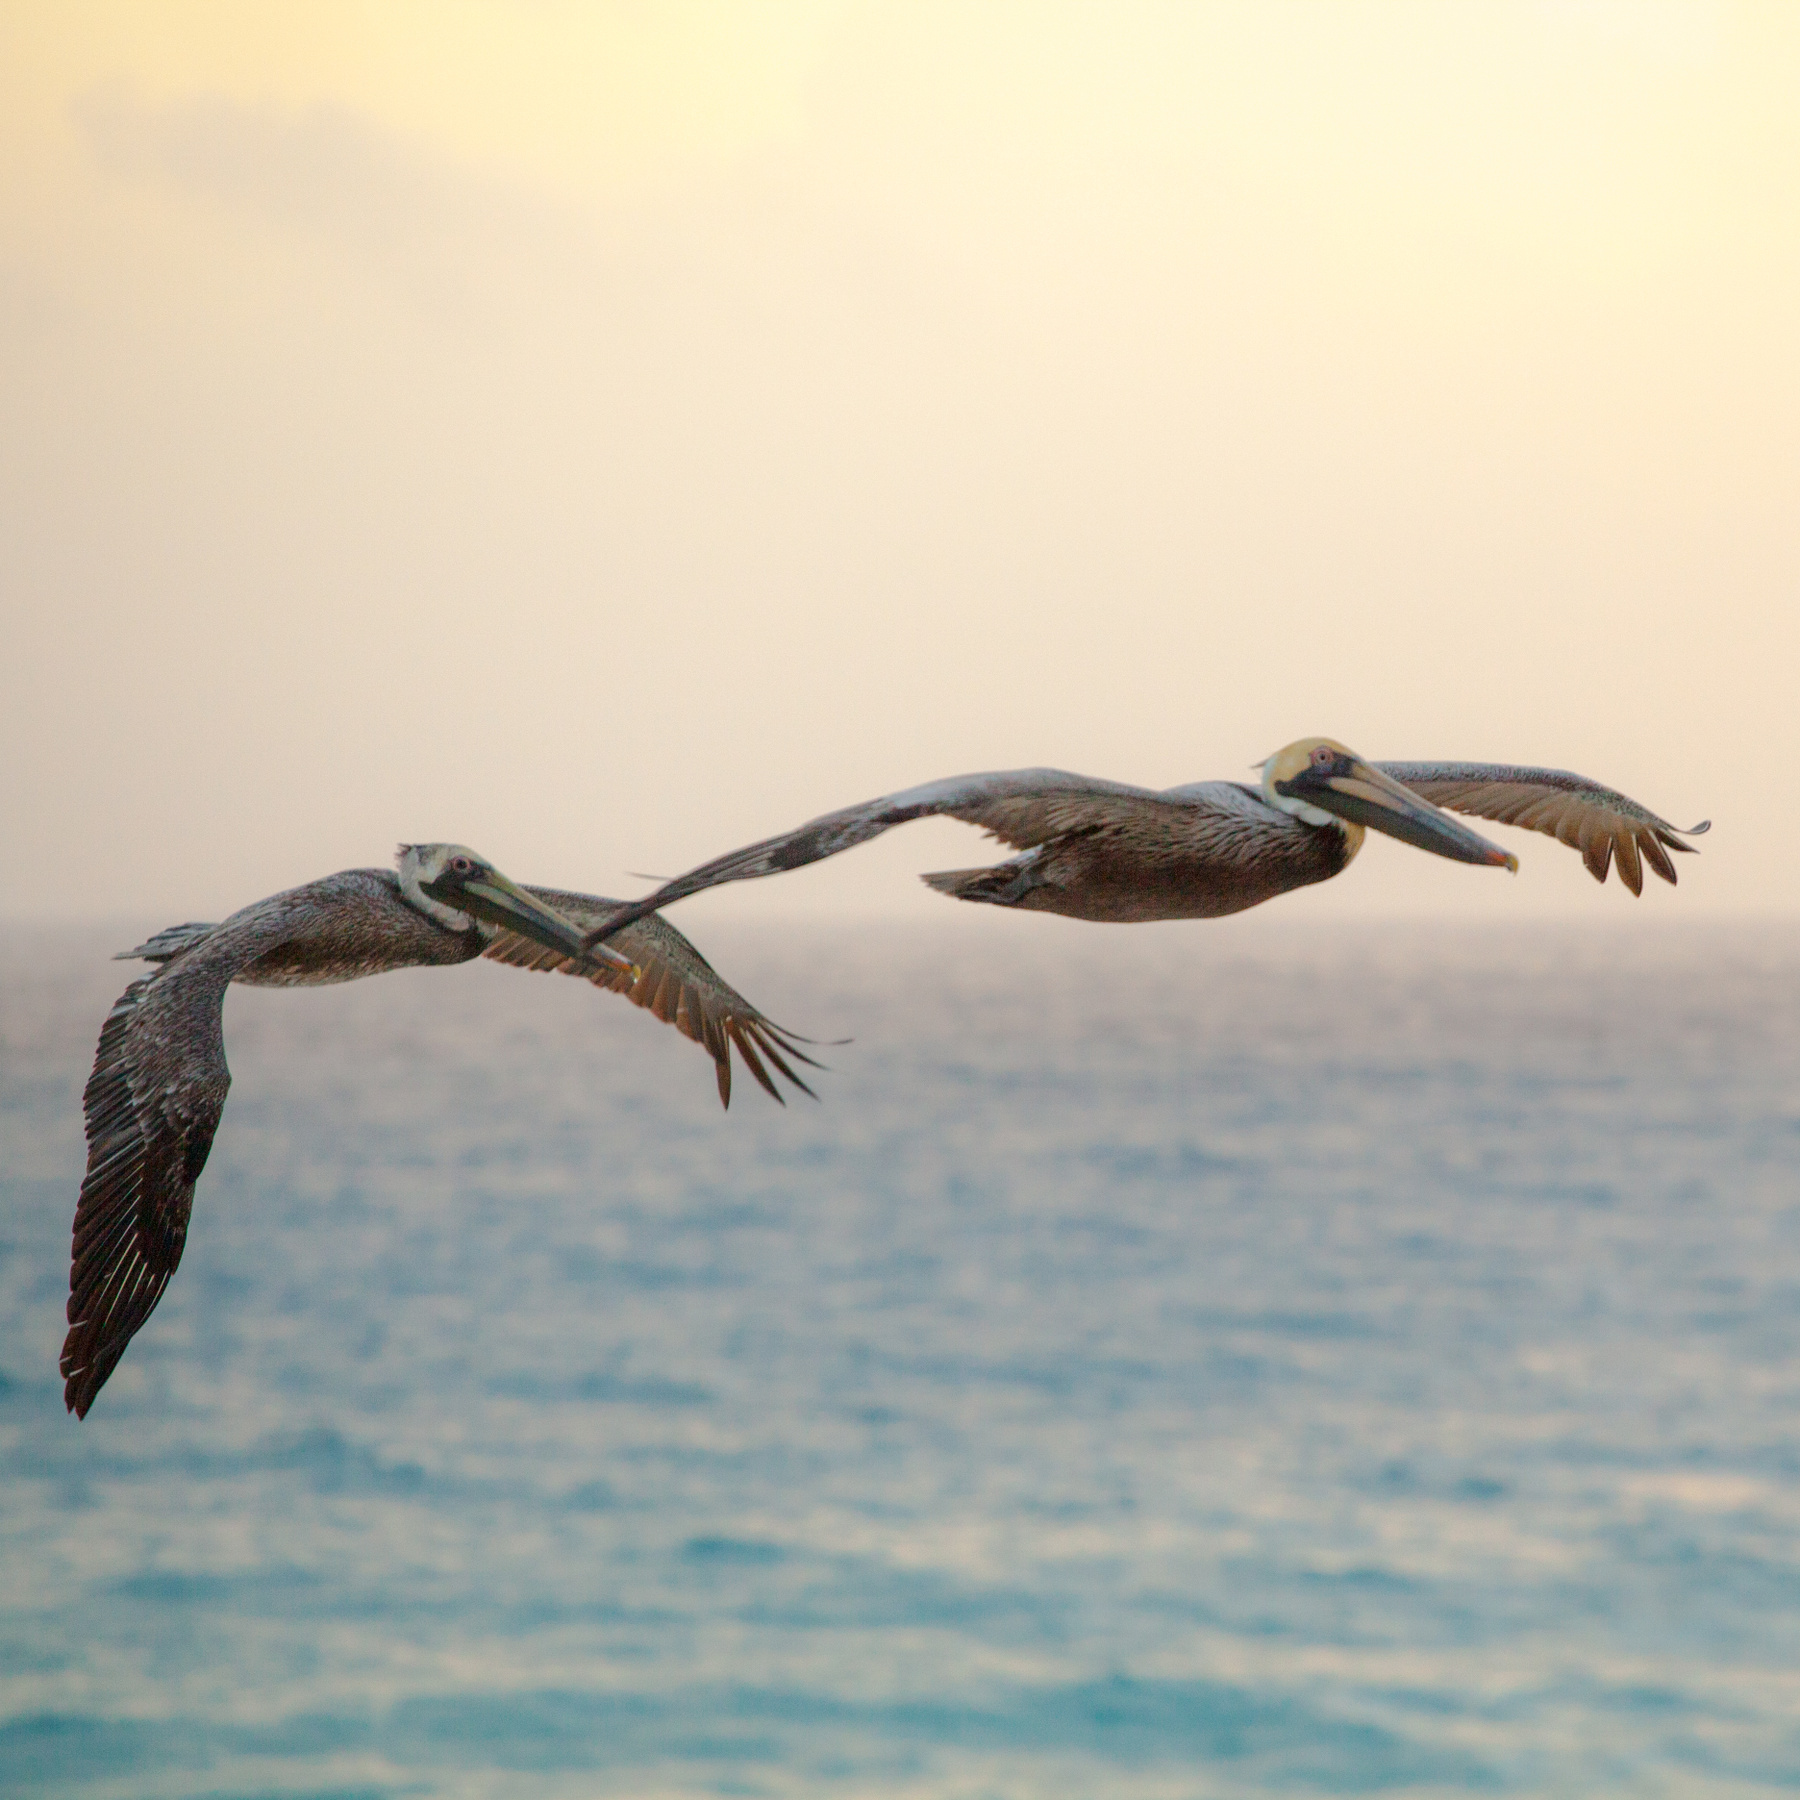 I'm on target, cover me! пеликаны птицы полет Канкун Мексика Карибы